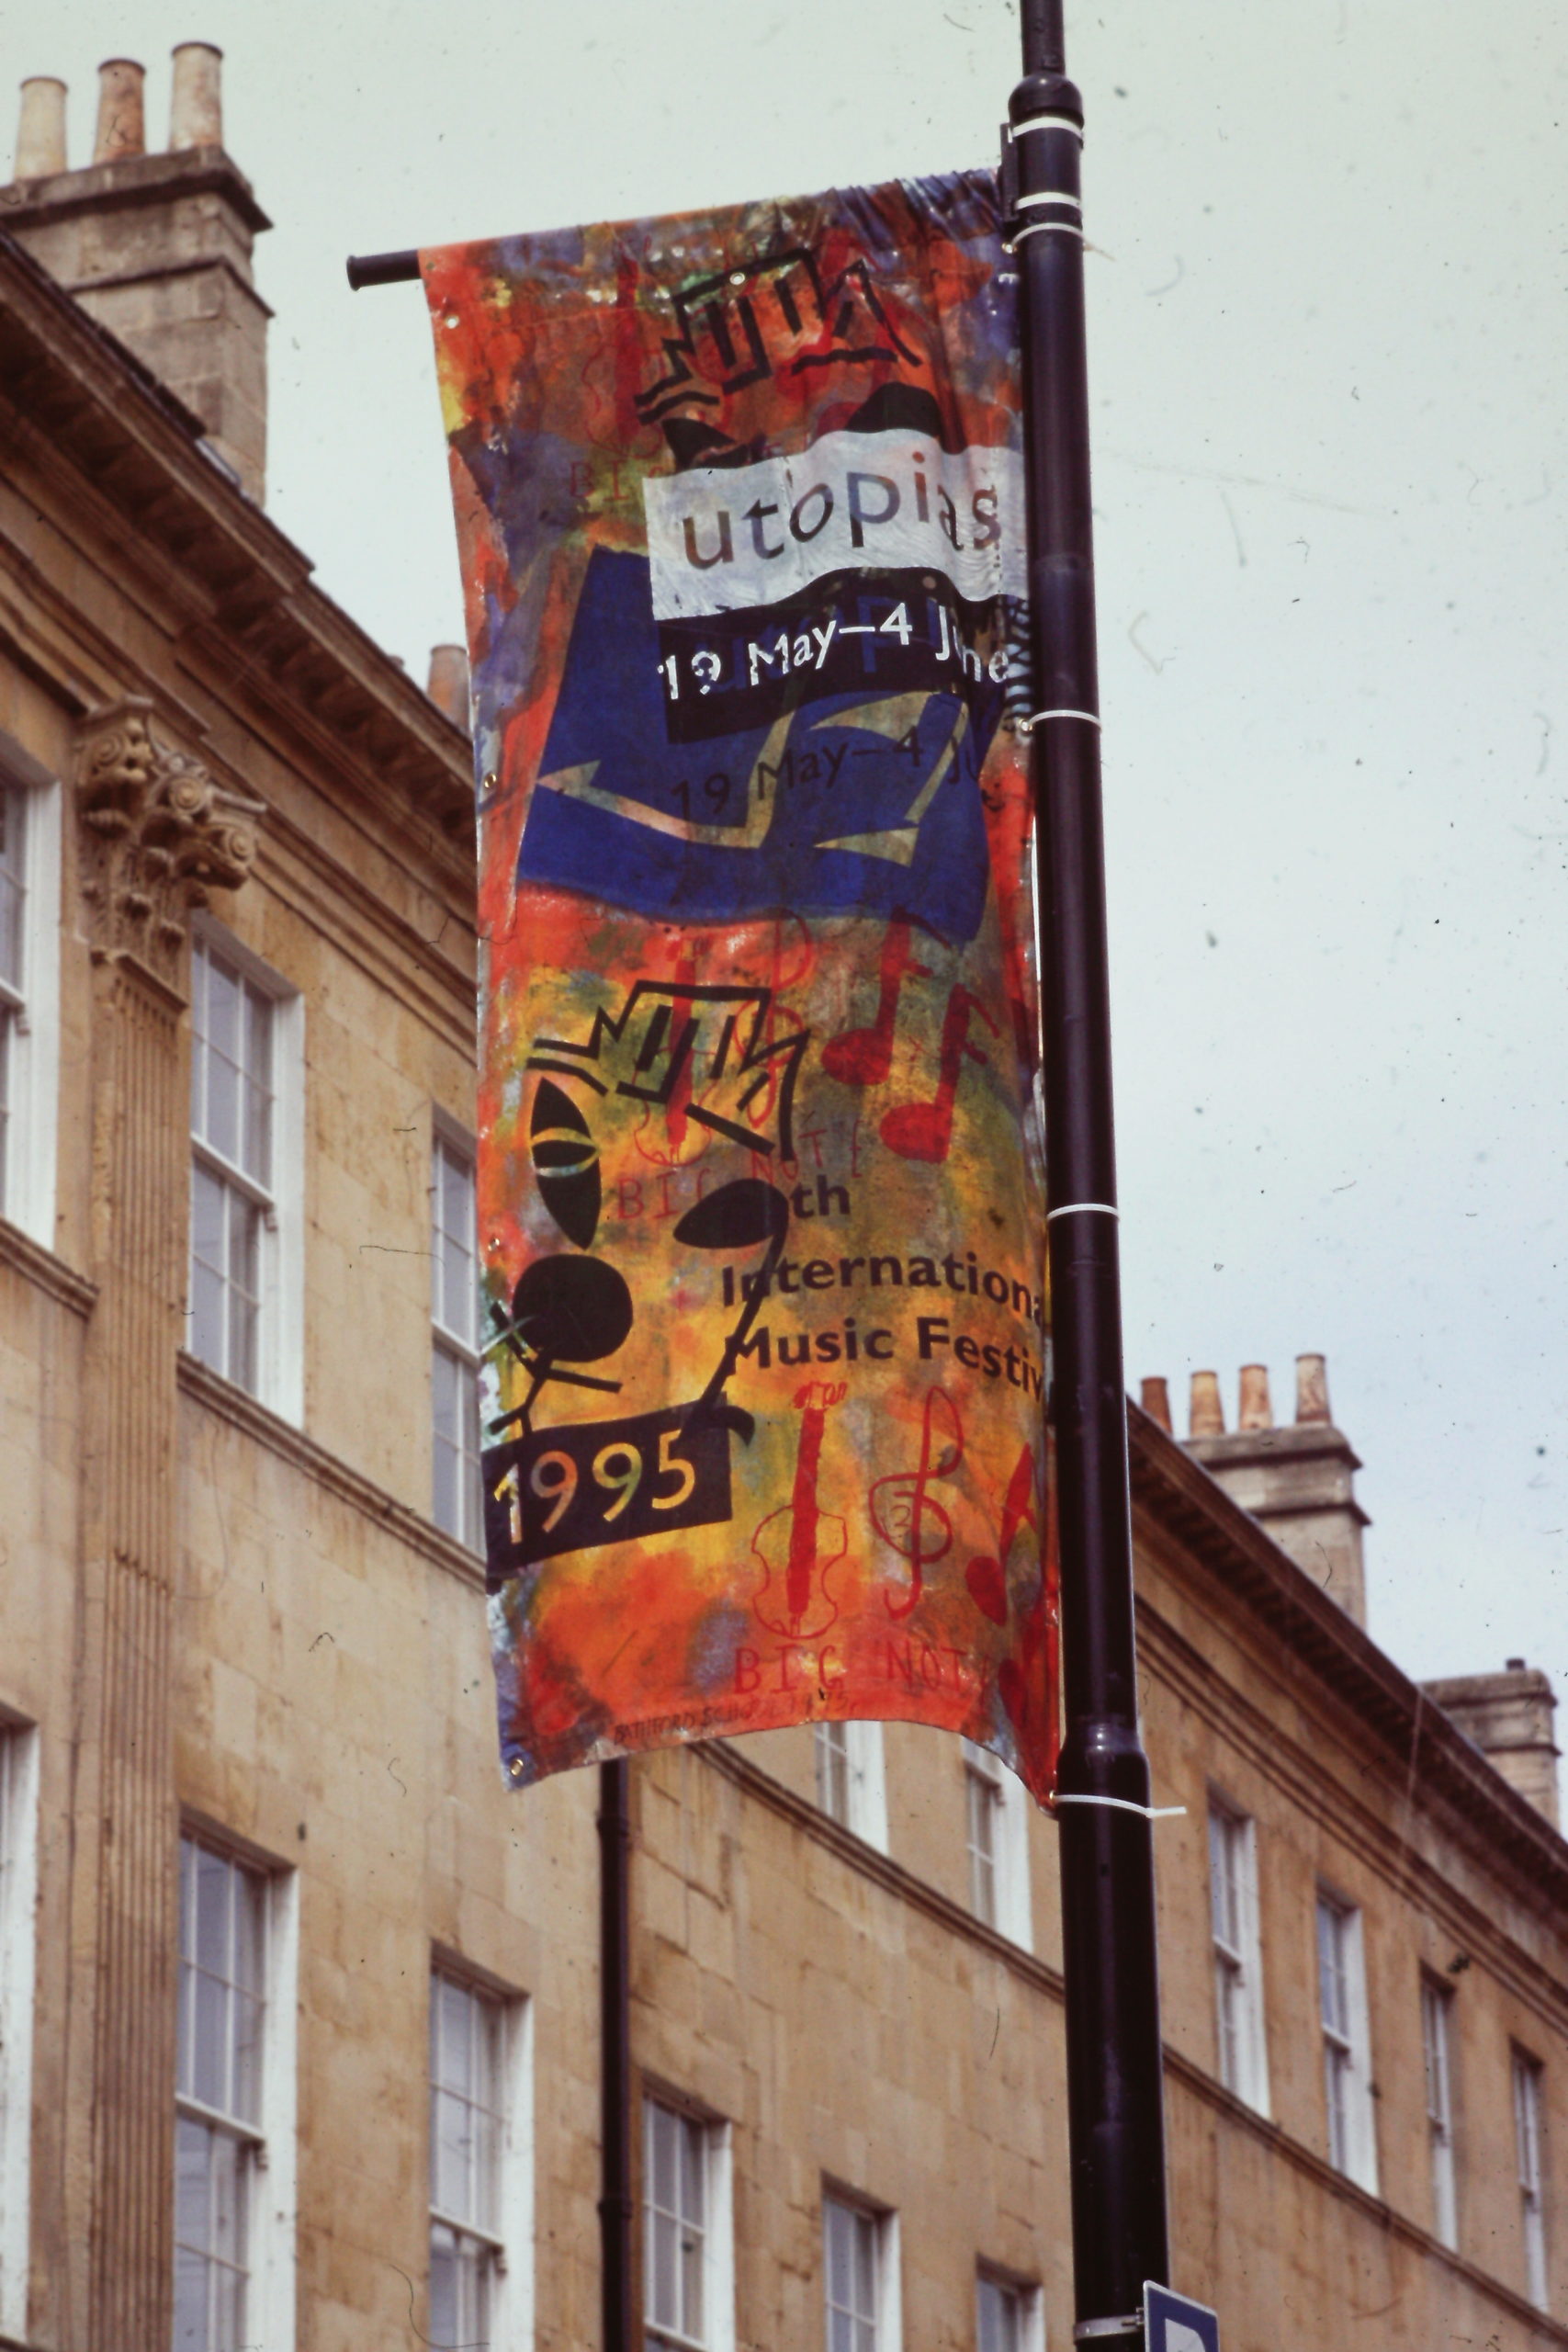 A 1995 Bath International Music Festival banner on a lampost